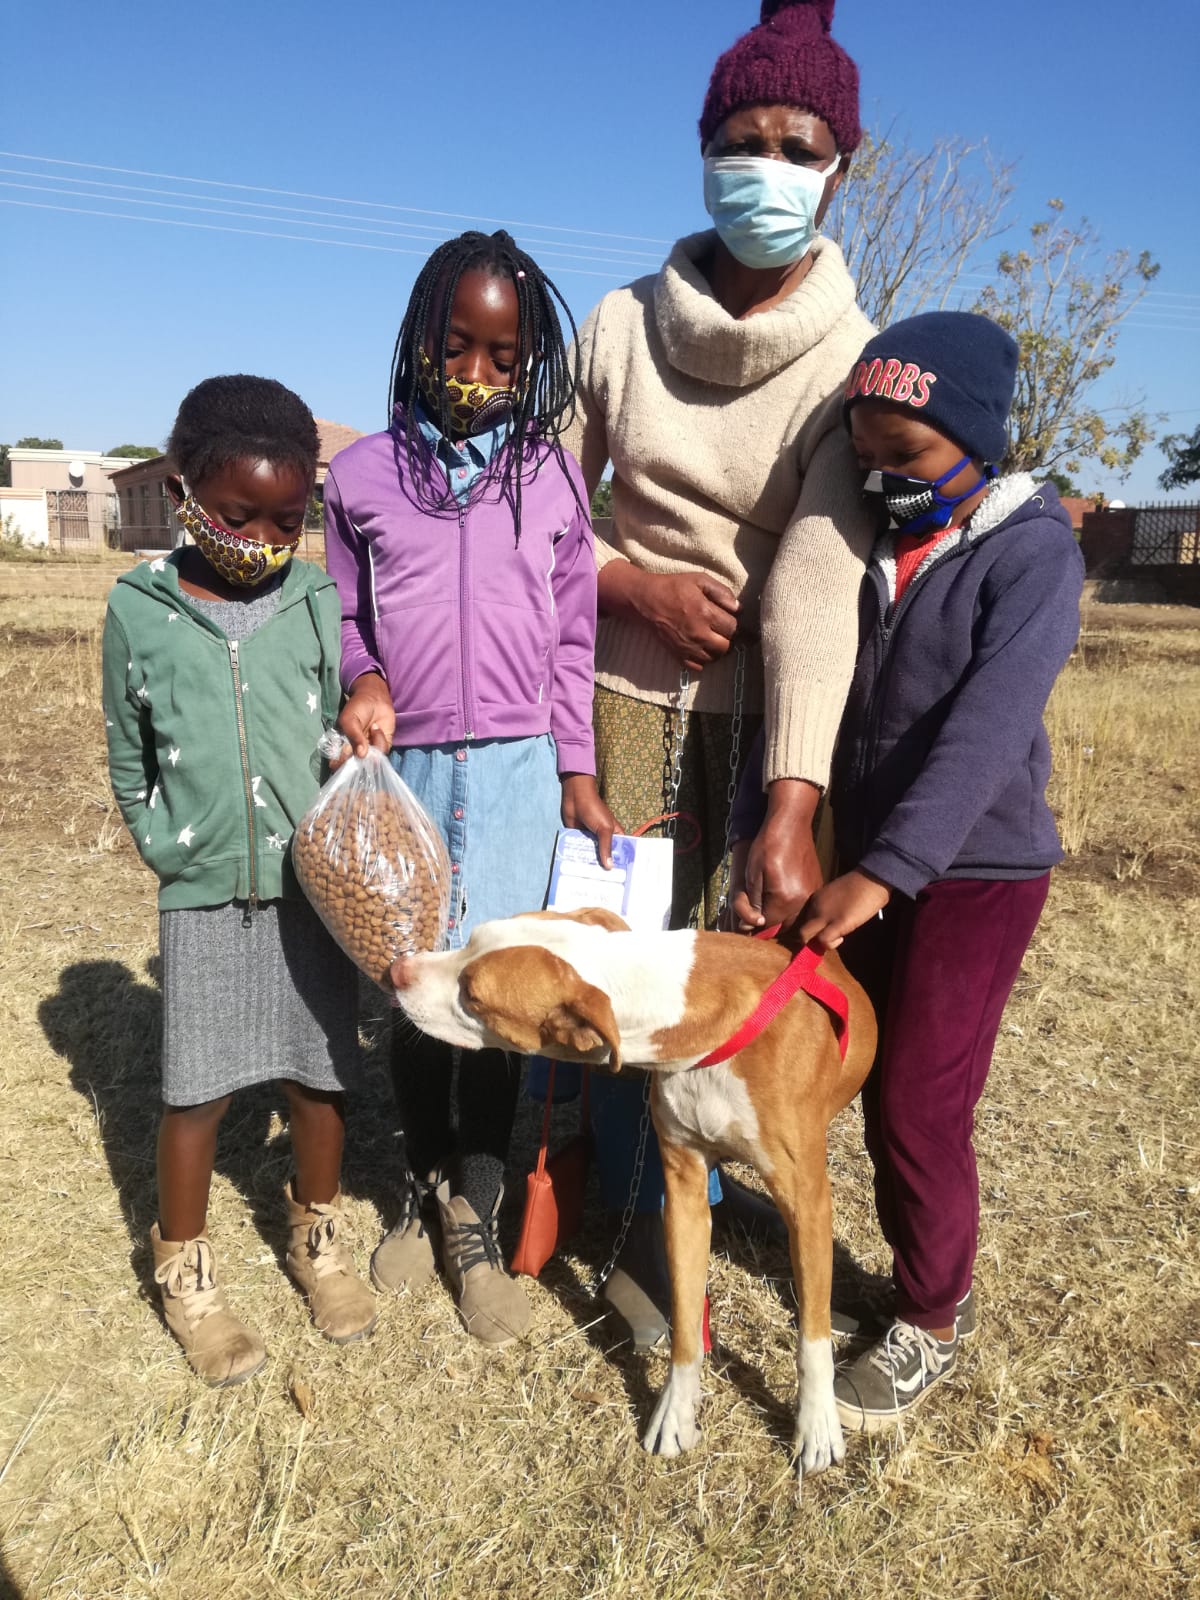 South African Veterinary Association Community Veterinary Clinics